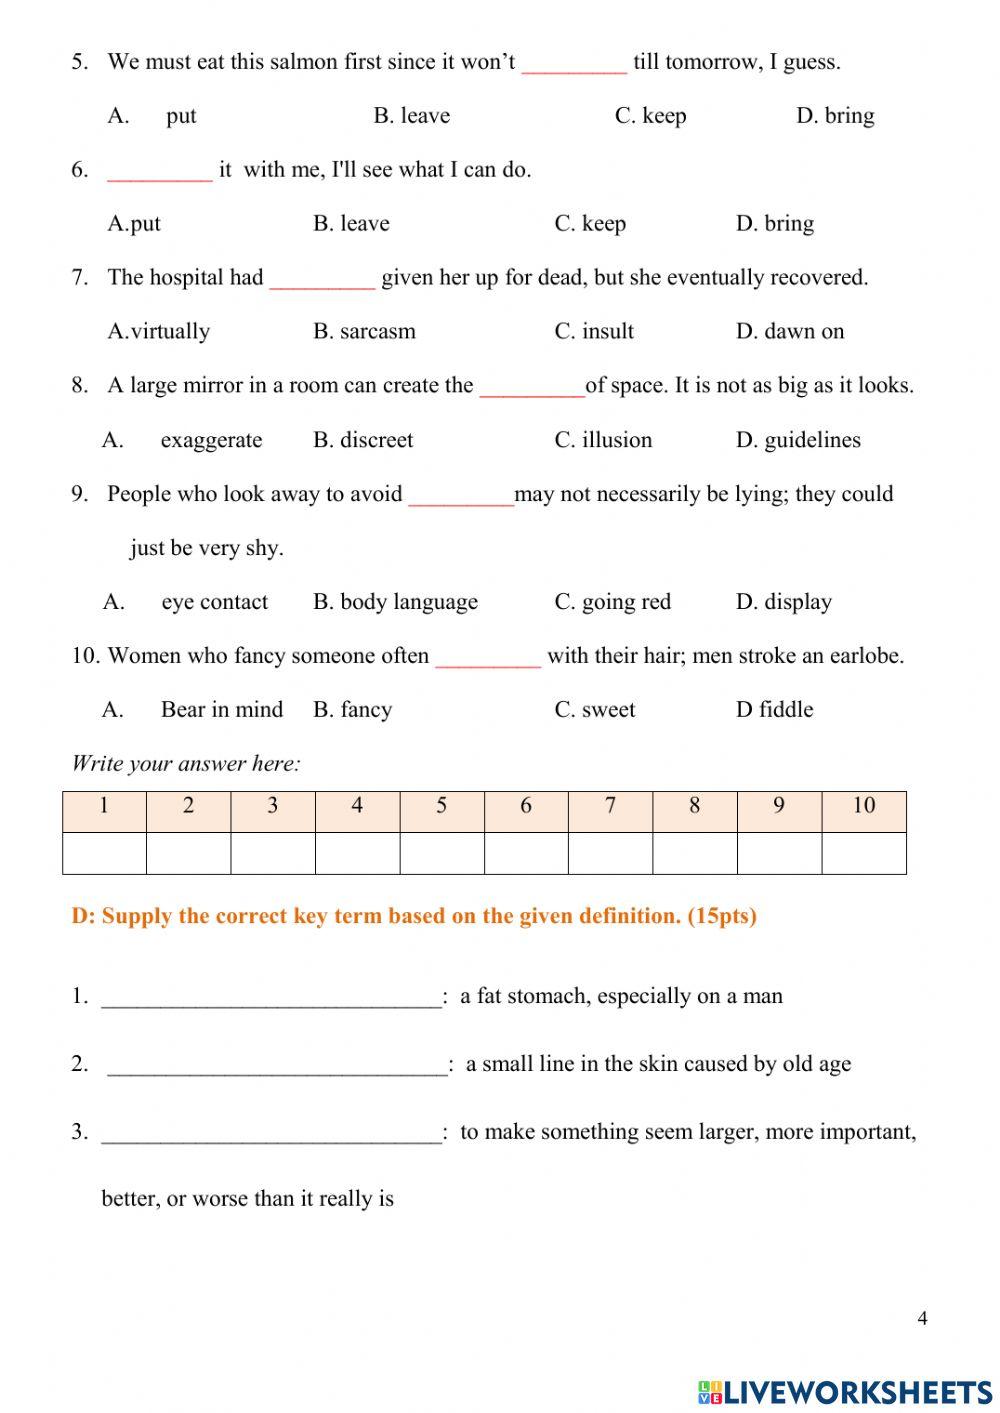 Level 7 Mid-Term Vocabulary Test